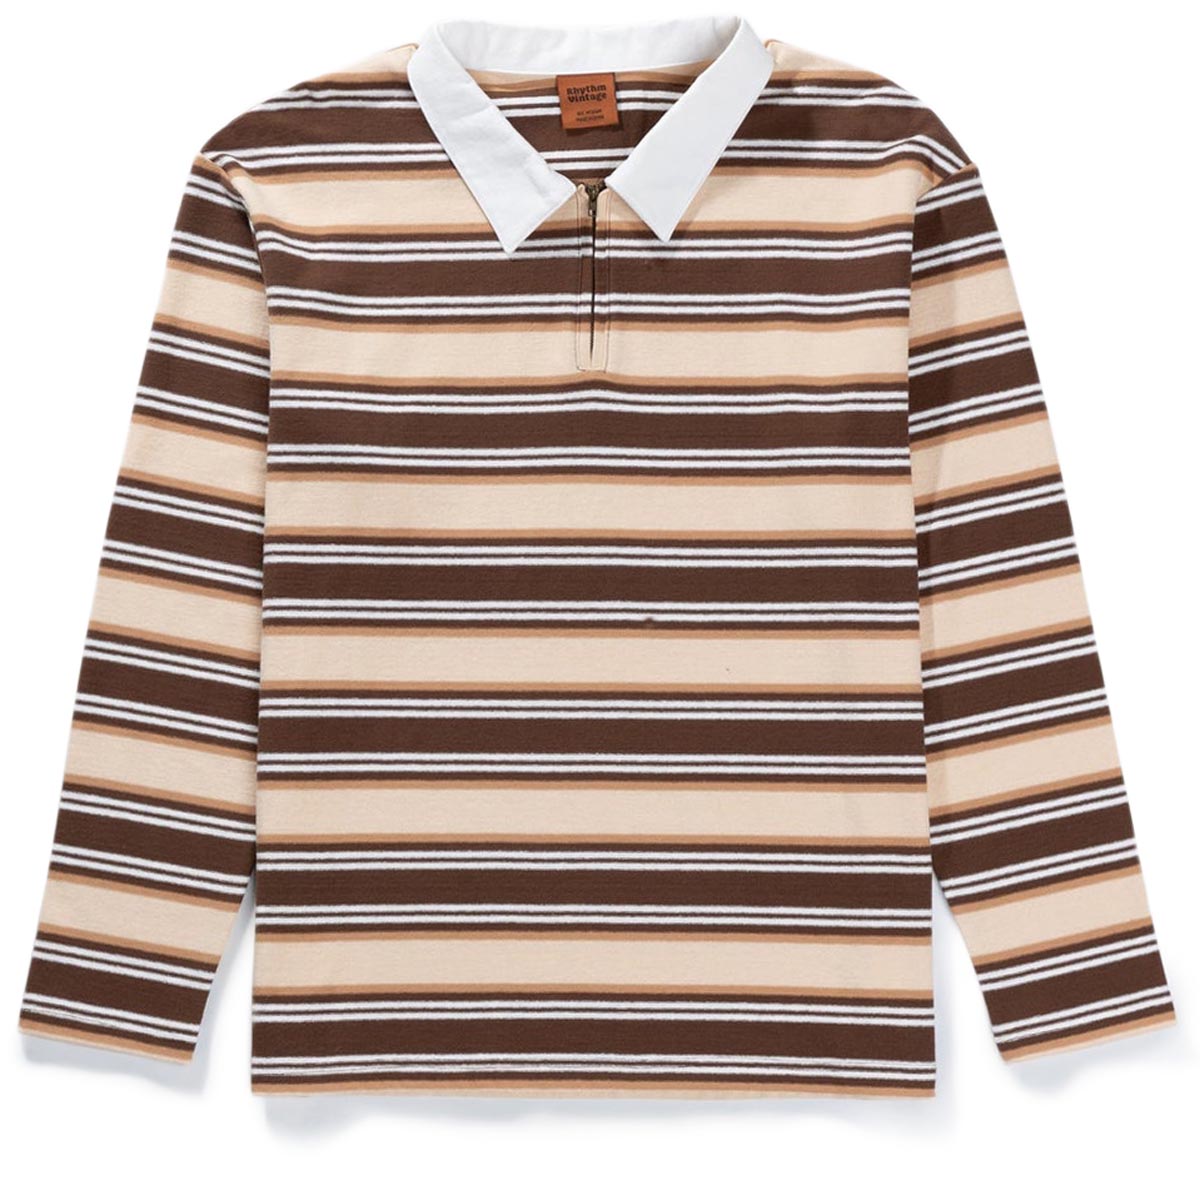 Rhythm Vintage Stripe Polo Long Sleeve Shirt - Coffee image 4